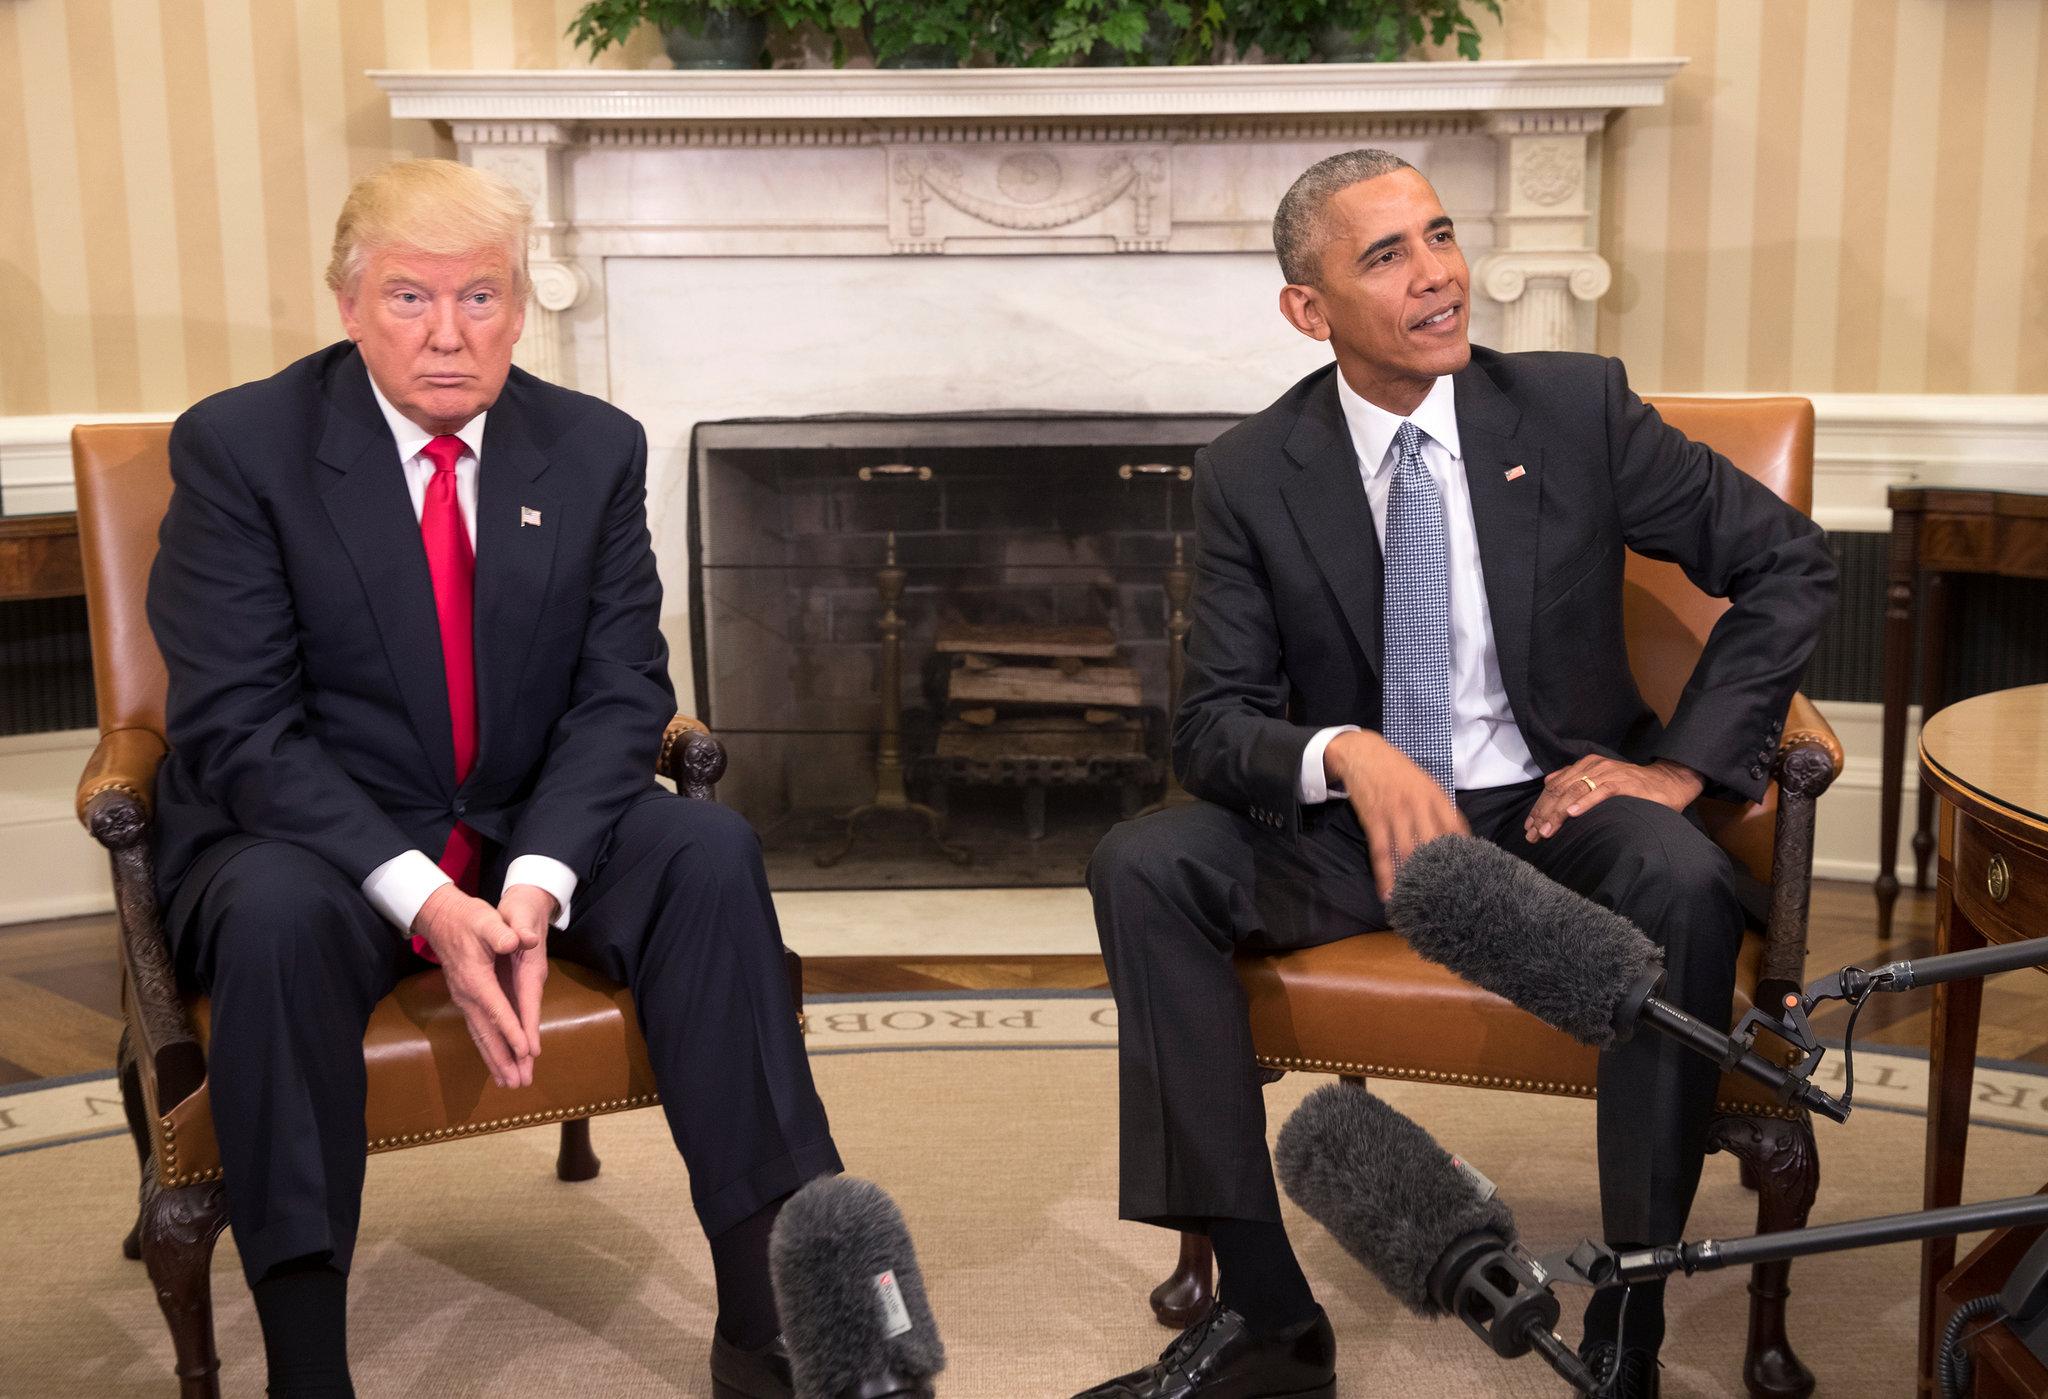  Obama’s Last Days: Aiding Trump Transition, but Erecting Policy Roadblocks